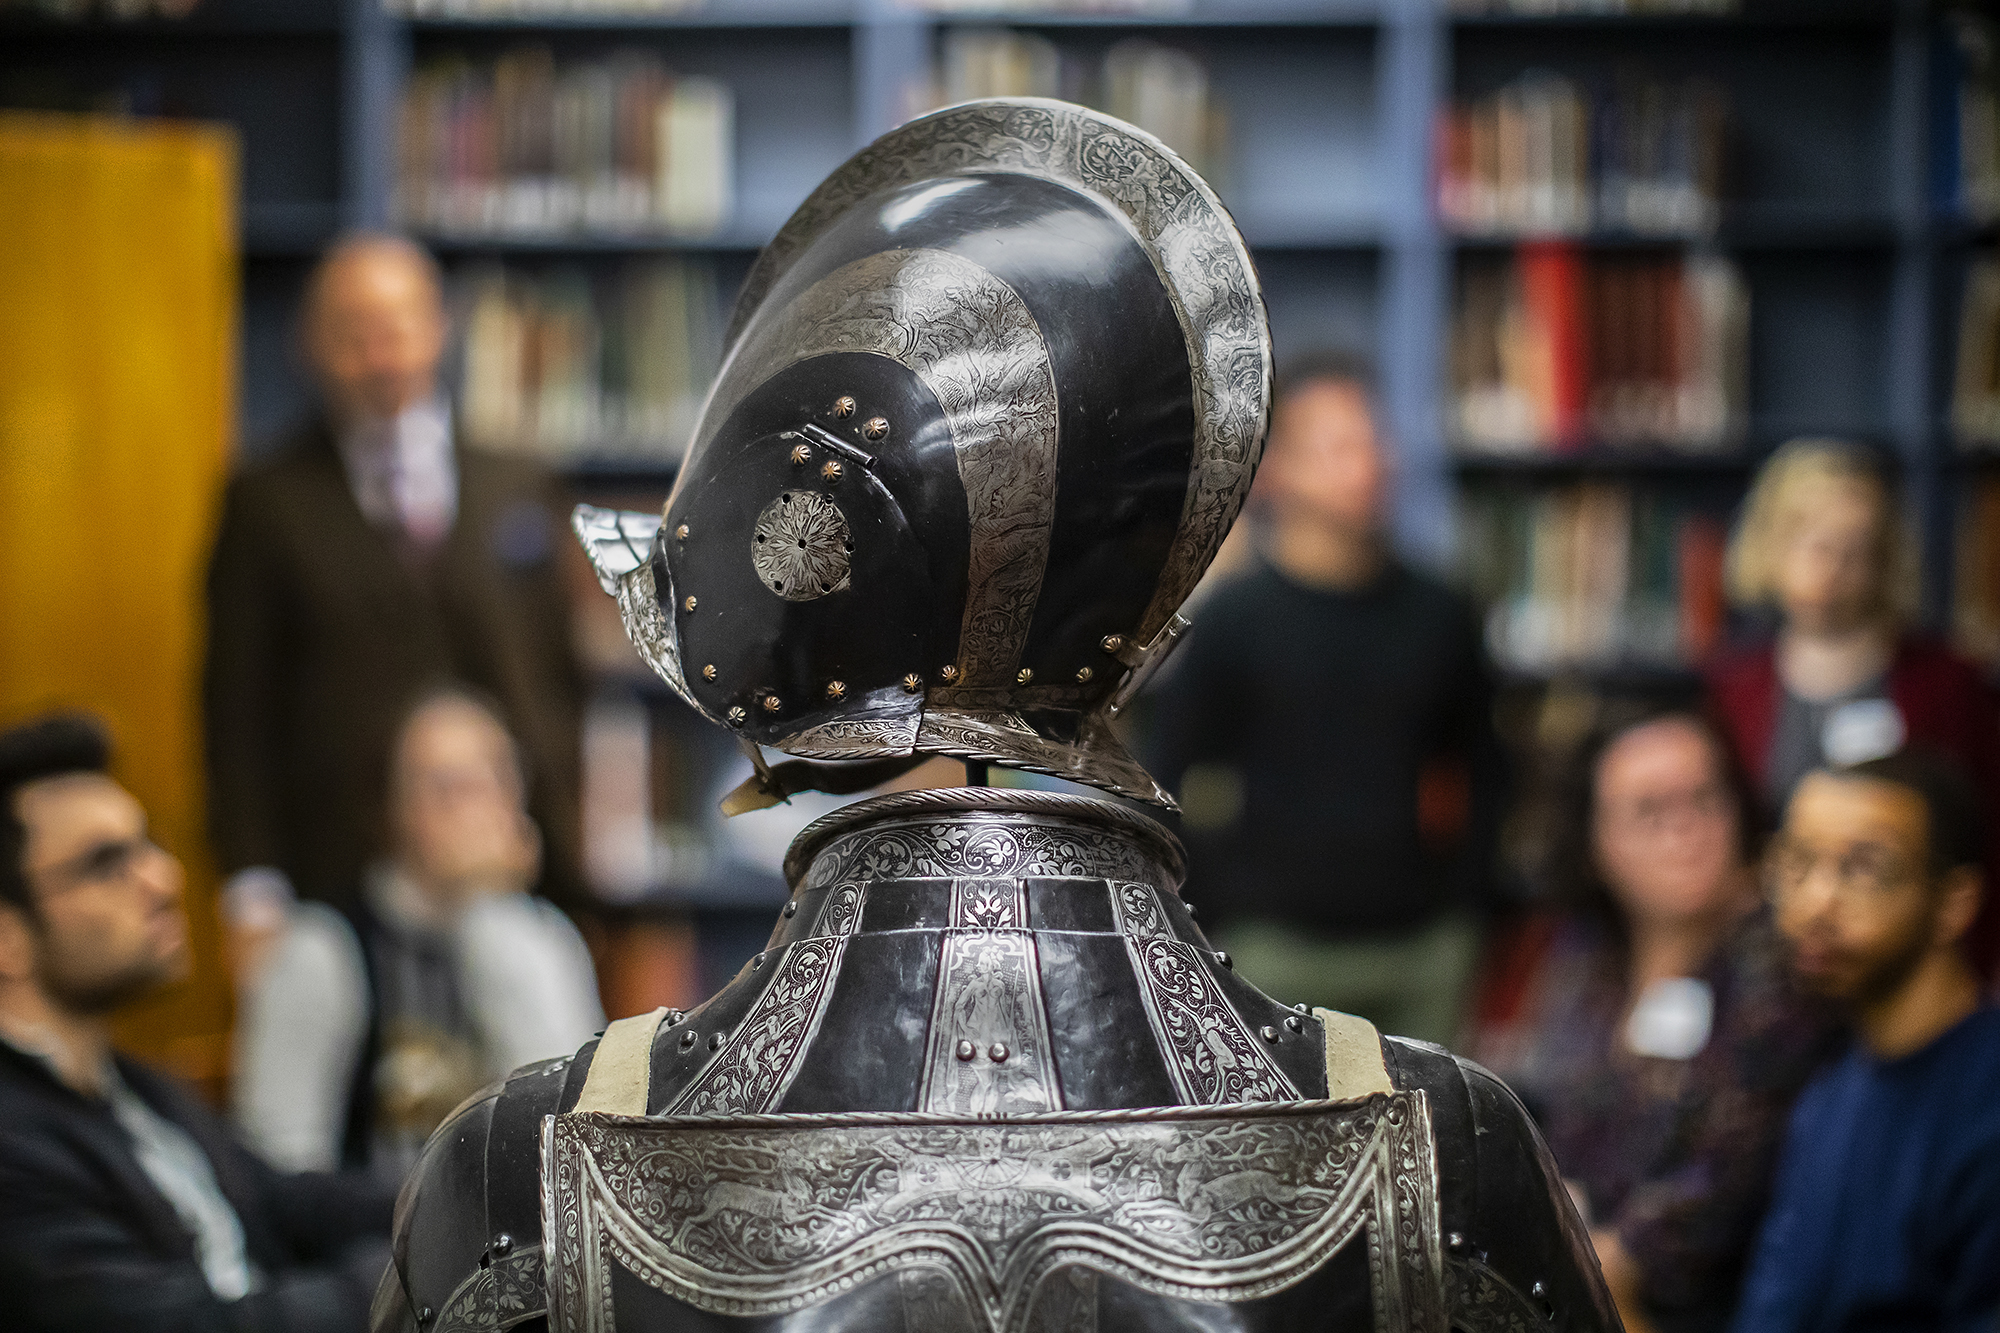 detail of helmet armor